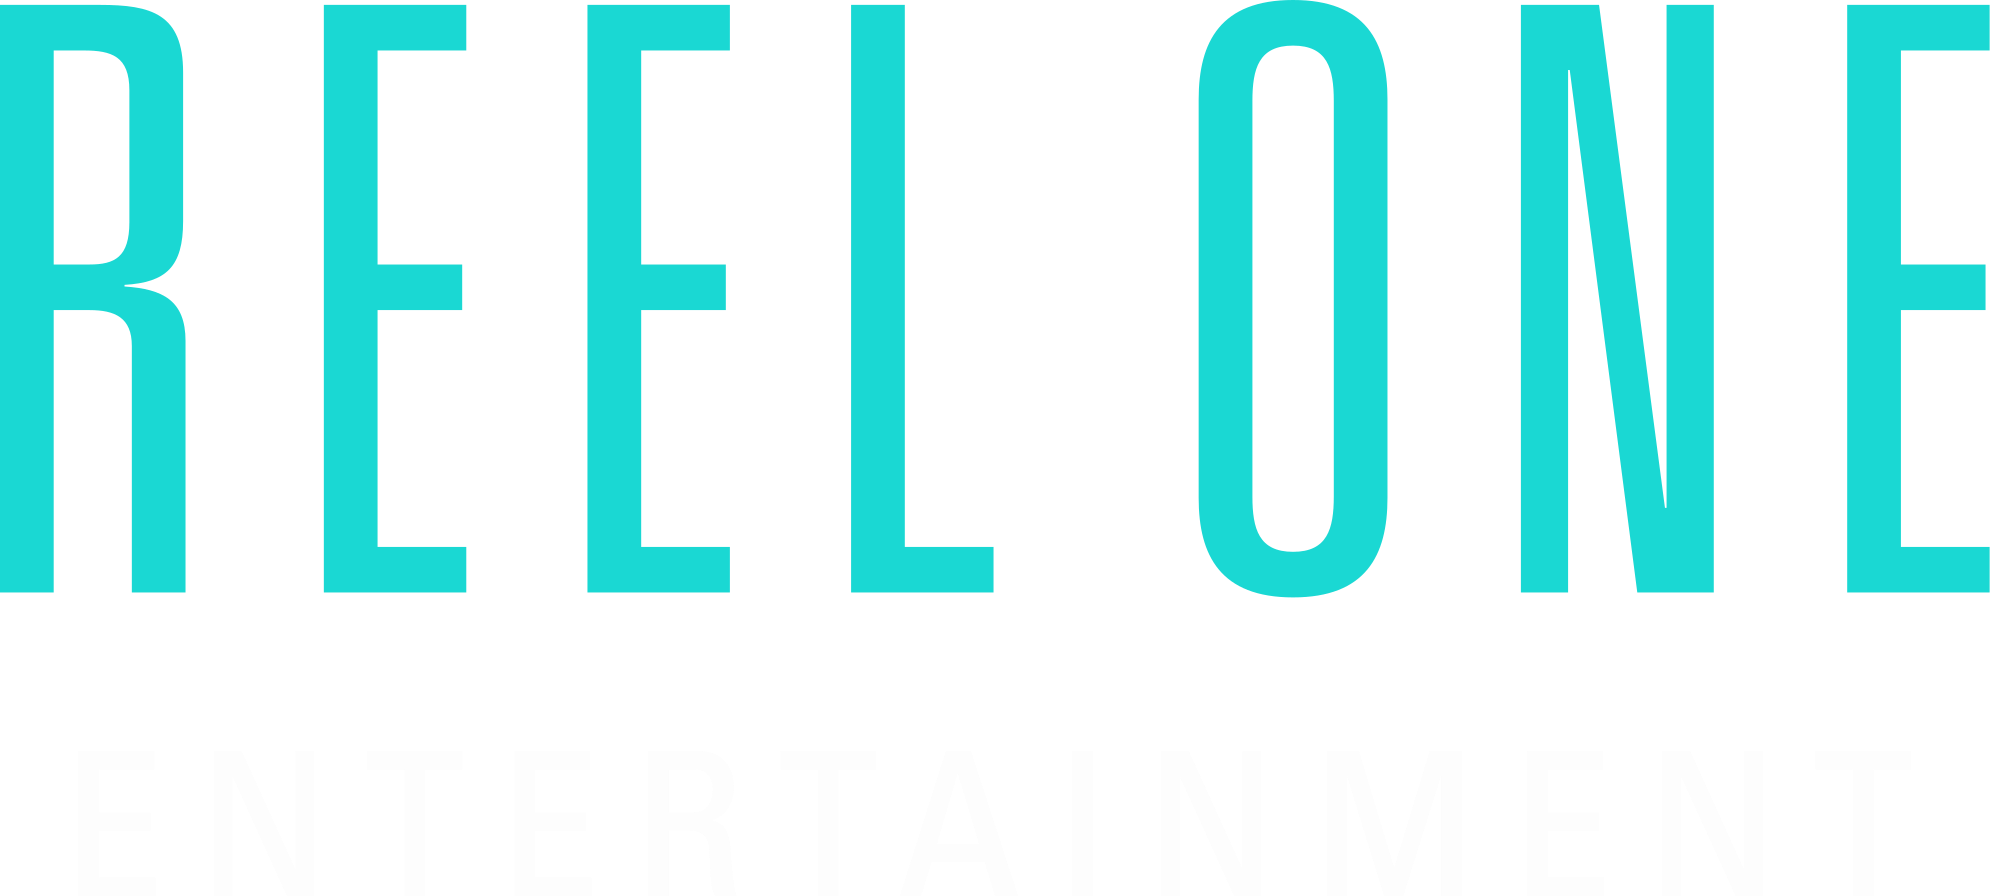 Reel One Entertainment - company